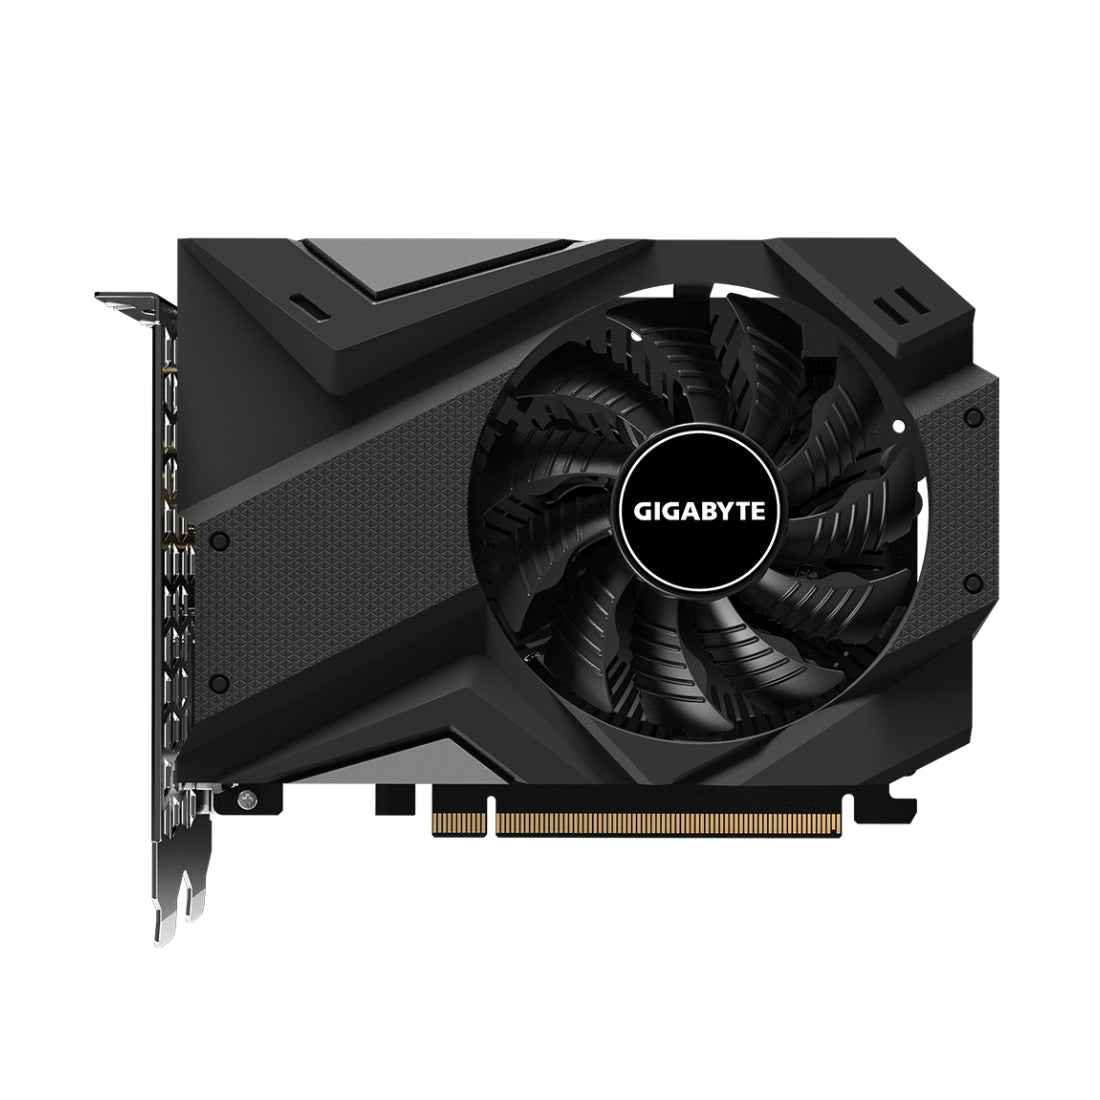 Gigabyte GeForce GTX 1650 4GB GDDR6 Graphics Card - كرت الشاشة - Store 974 | ستور ٩٧٤